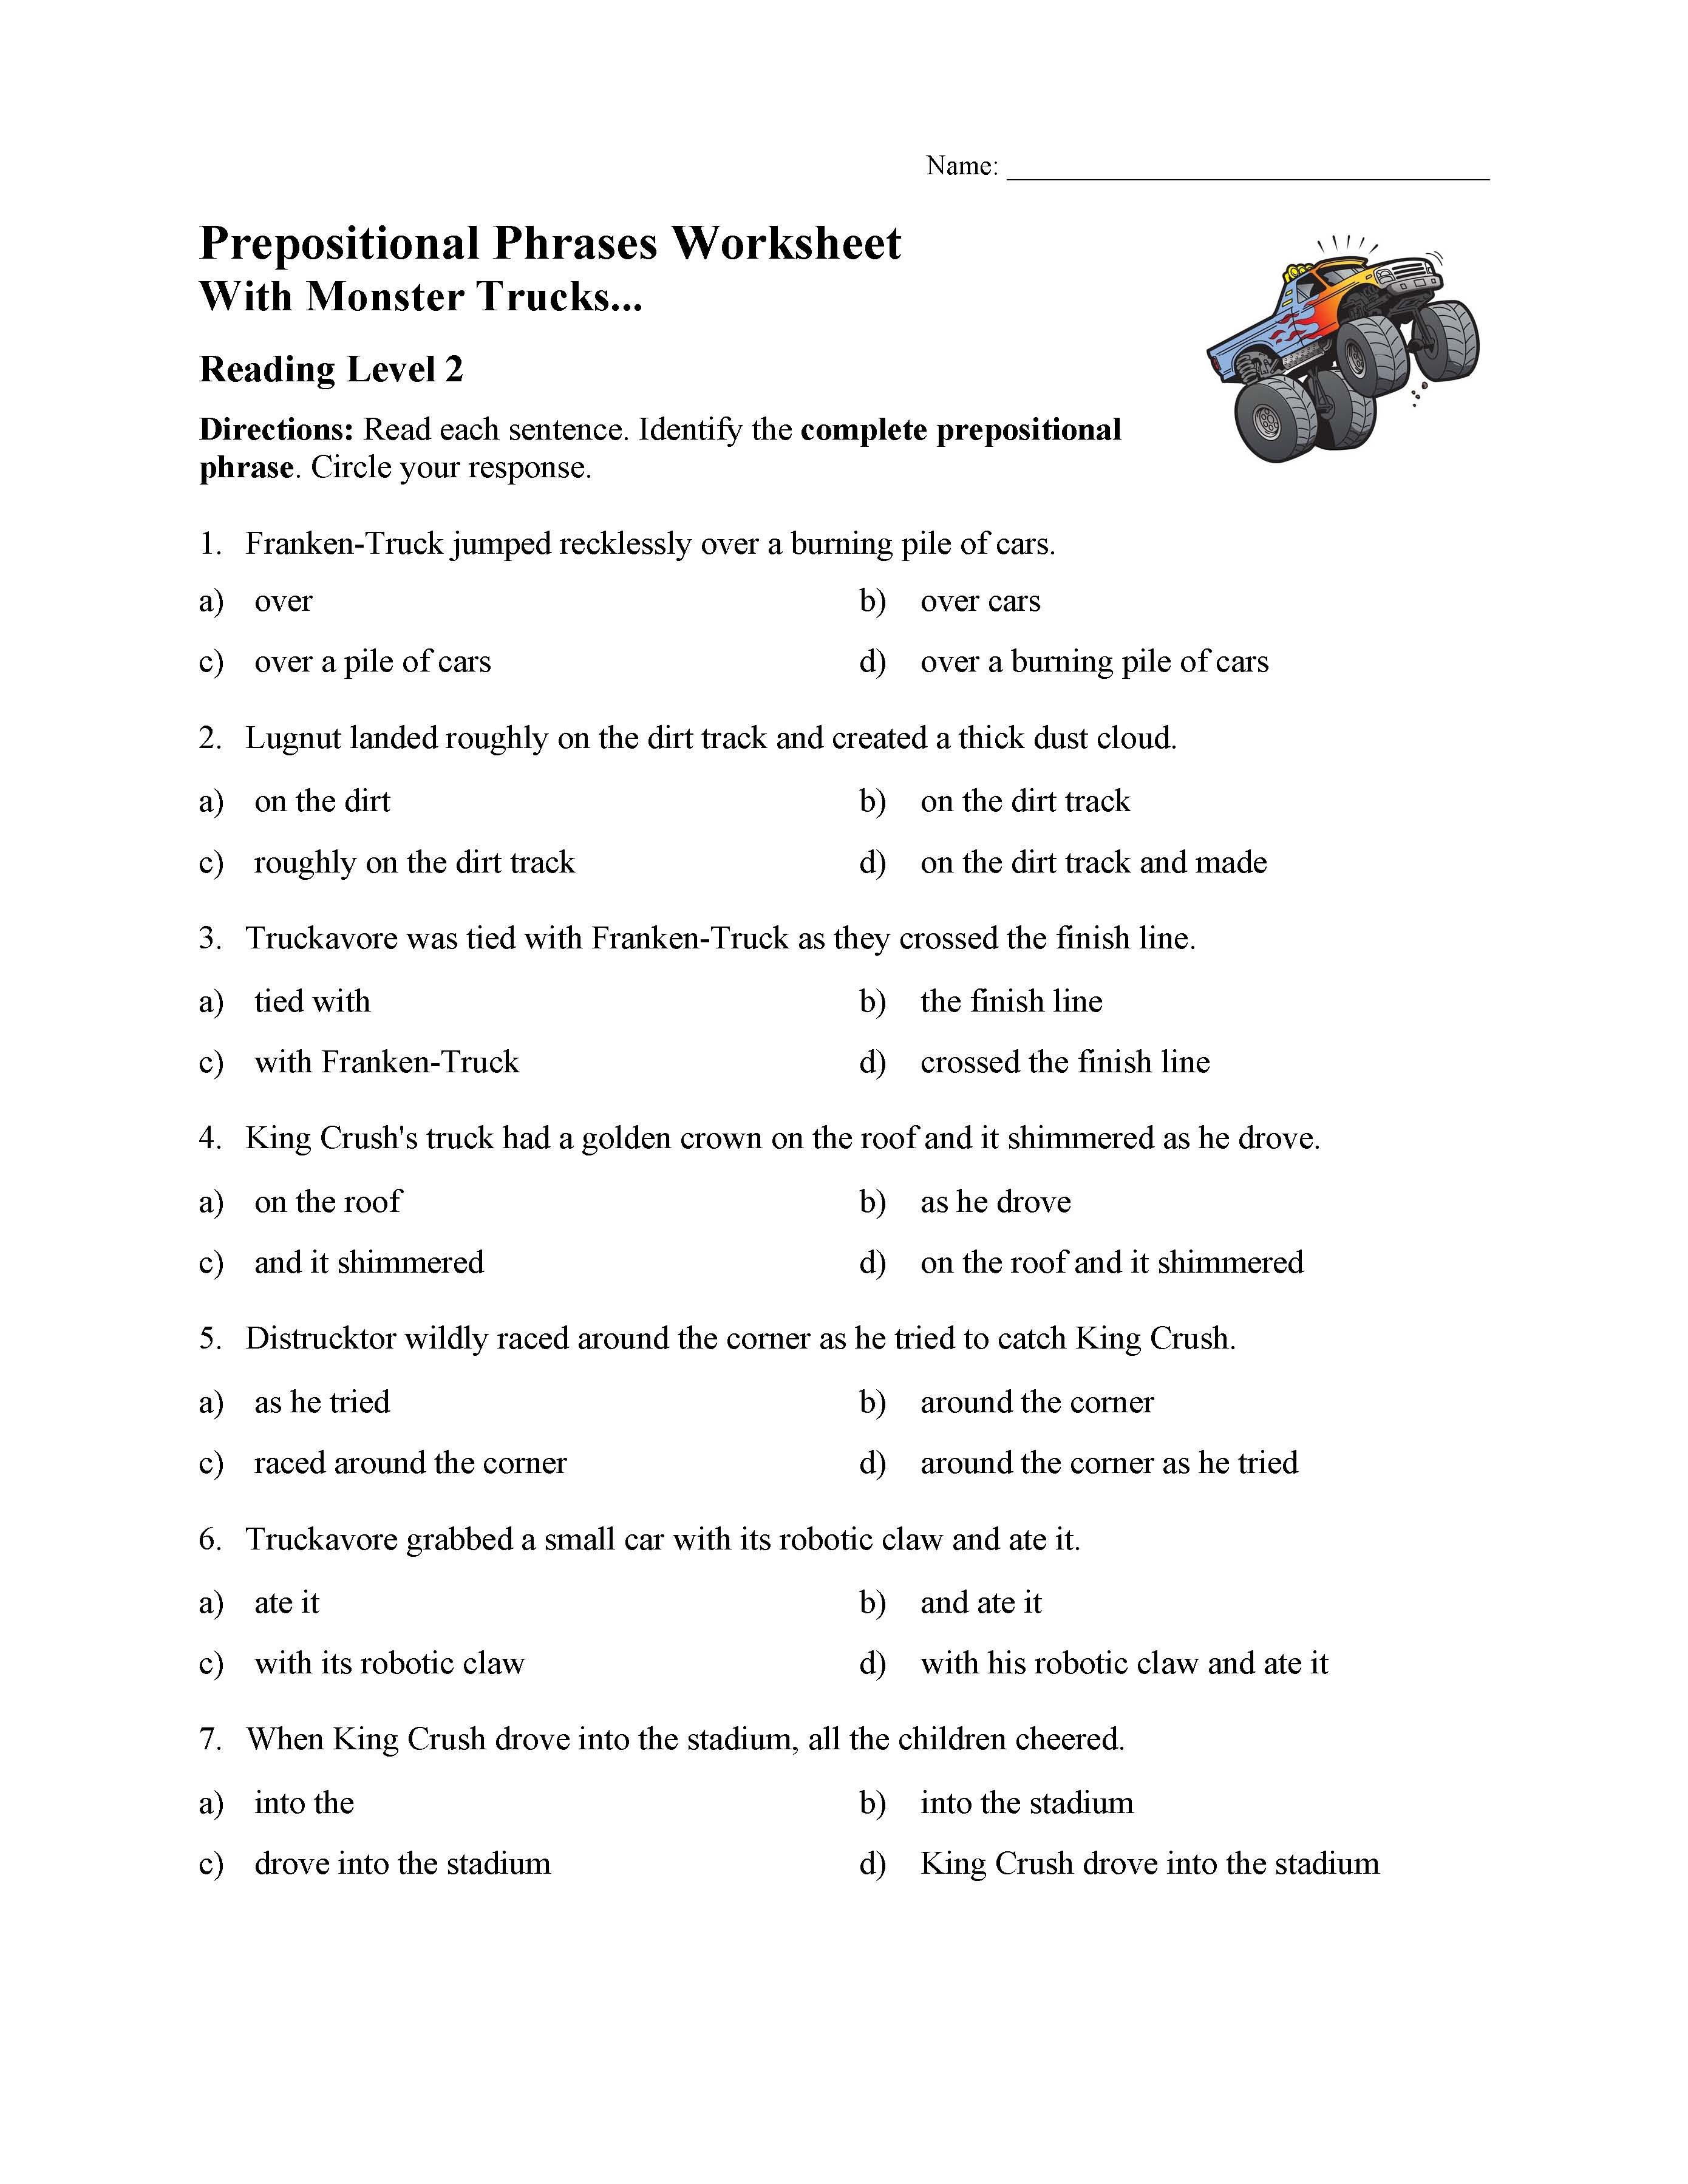 prepositional-phrases-worksheet-with-monster-trucks-parts-of-speech